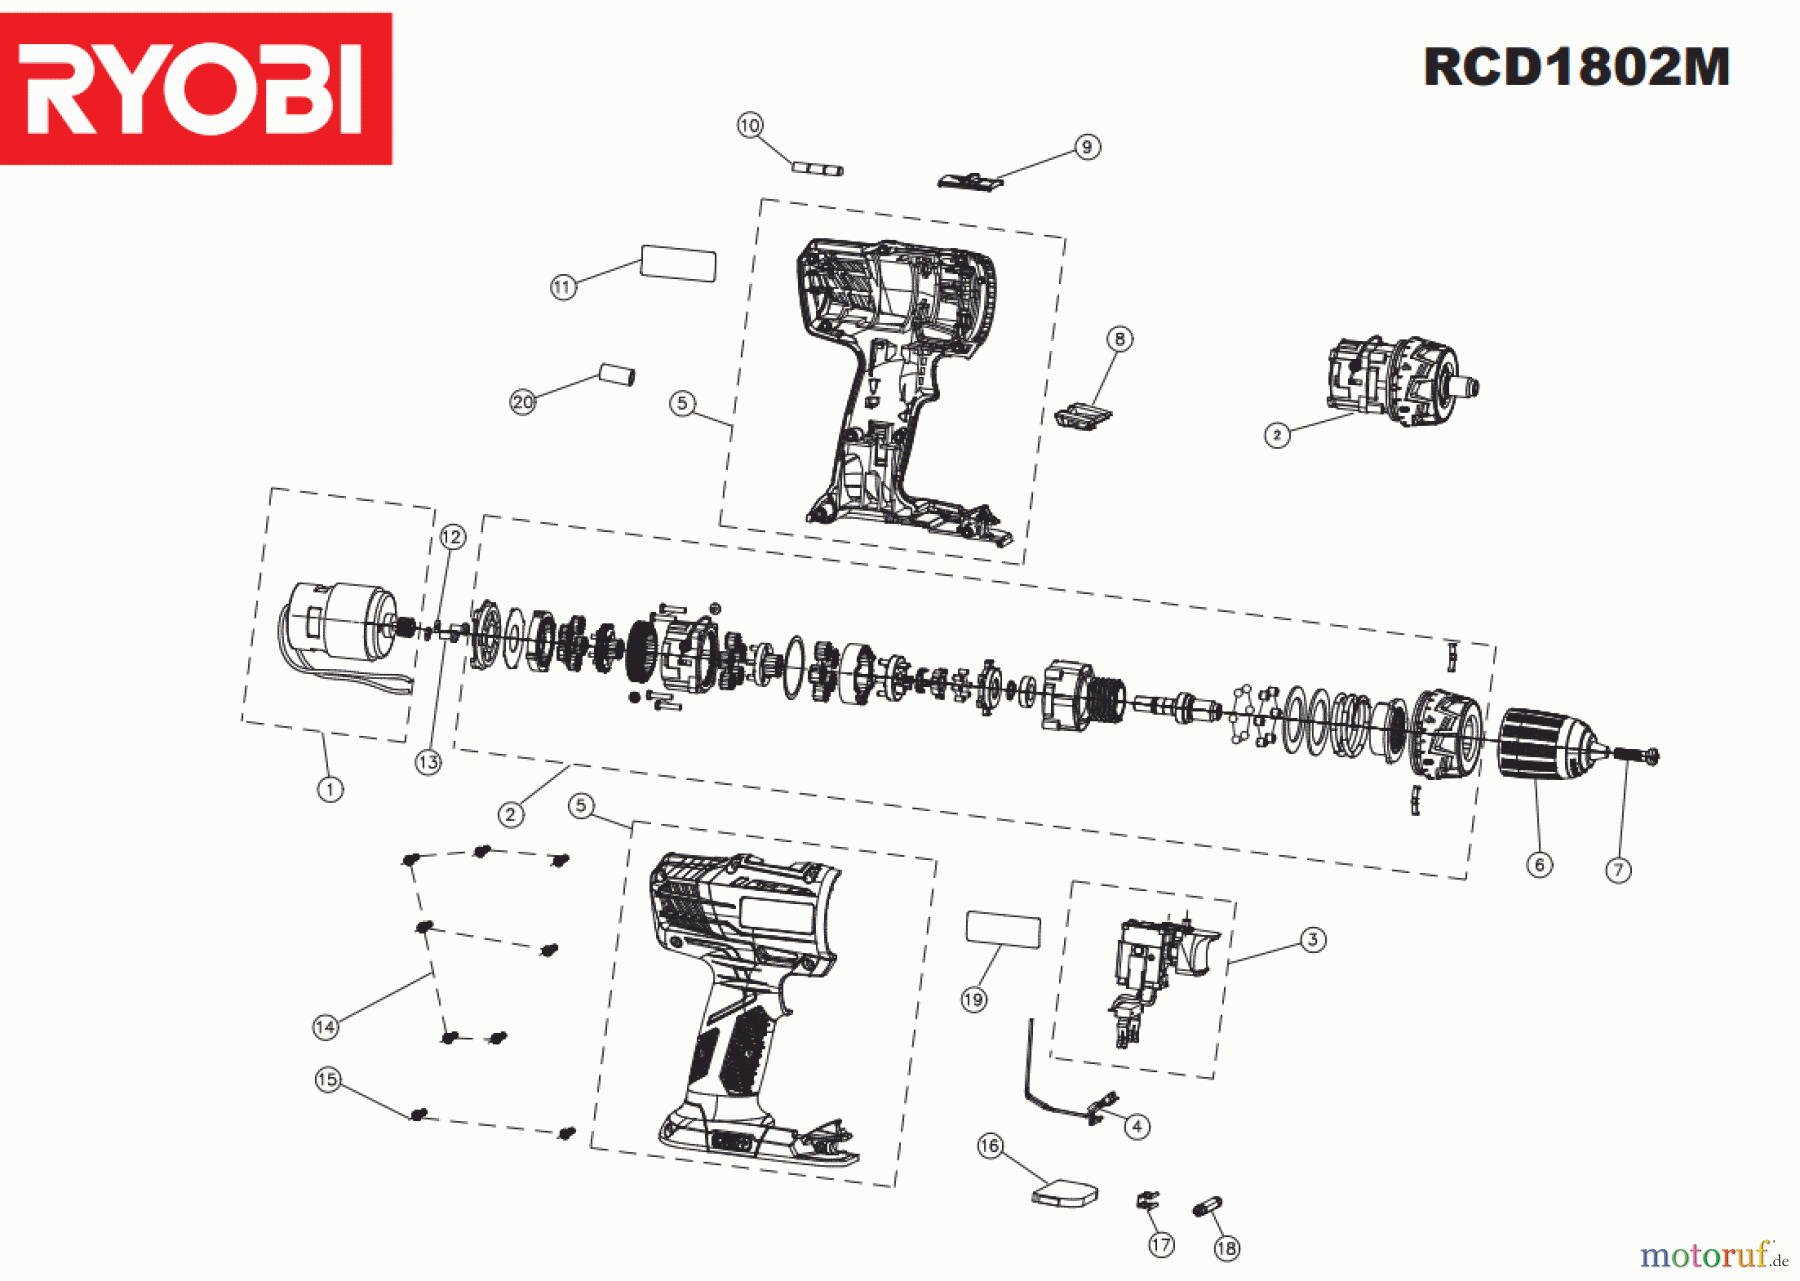  Ryobi (Schlag-)Bohrschrauber Bohrschrauber RCD1802M Seite 1